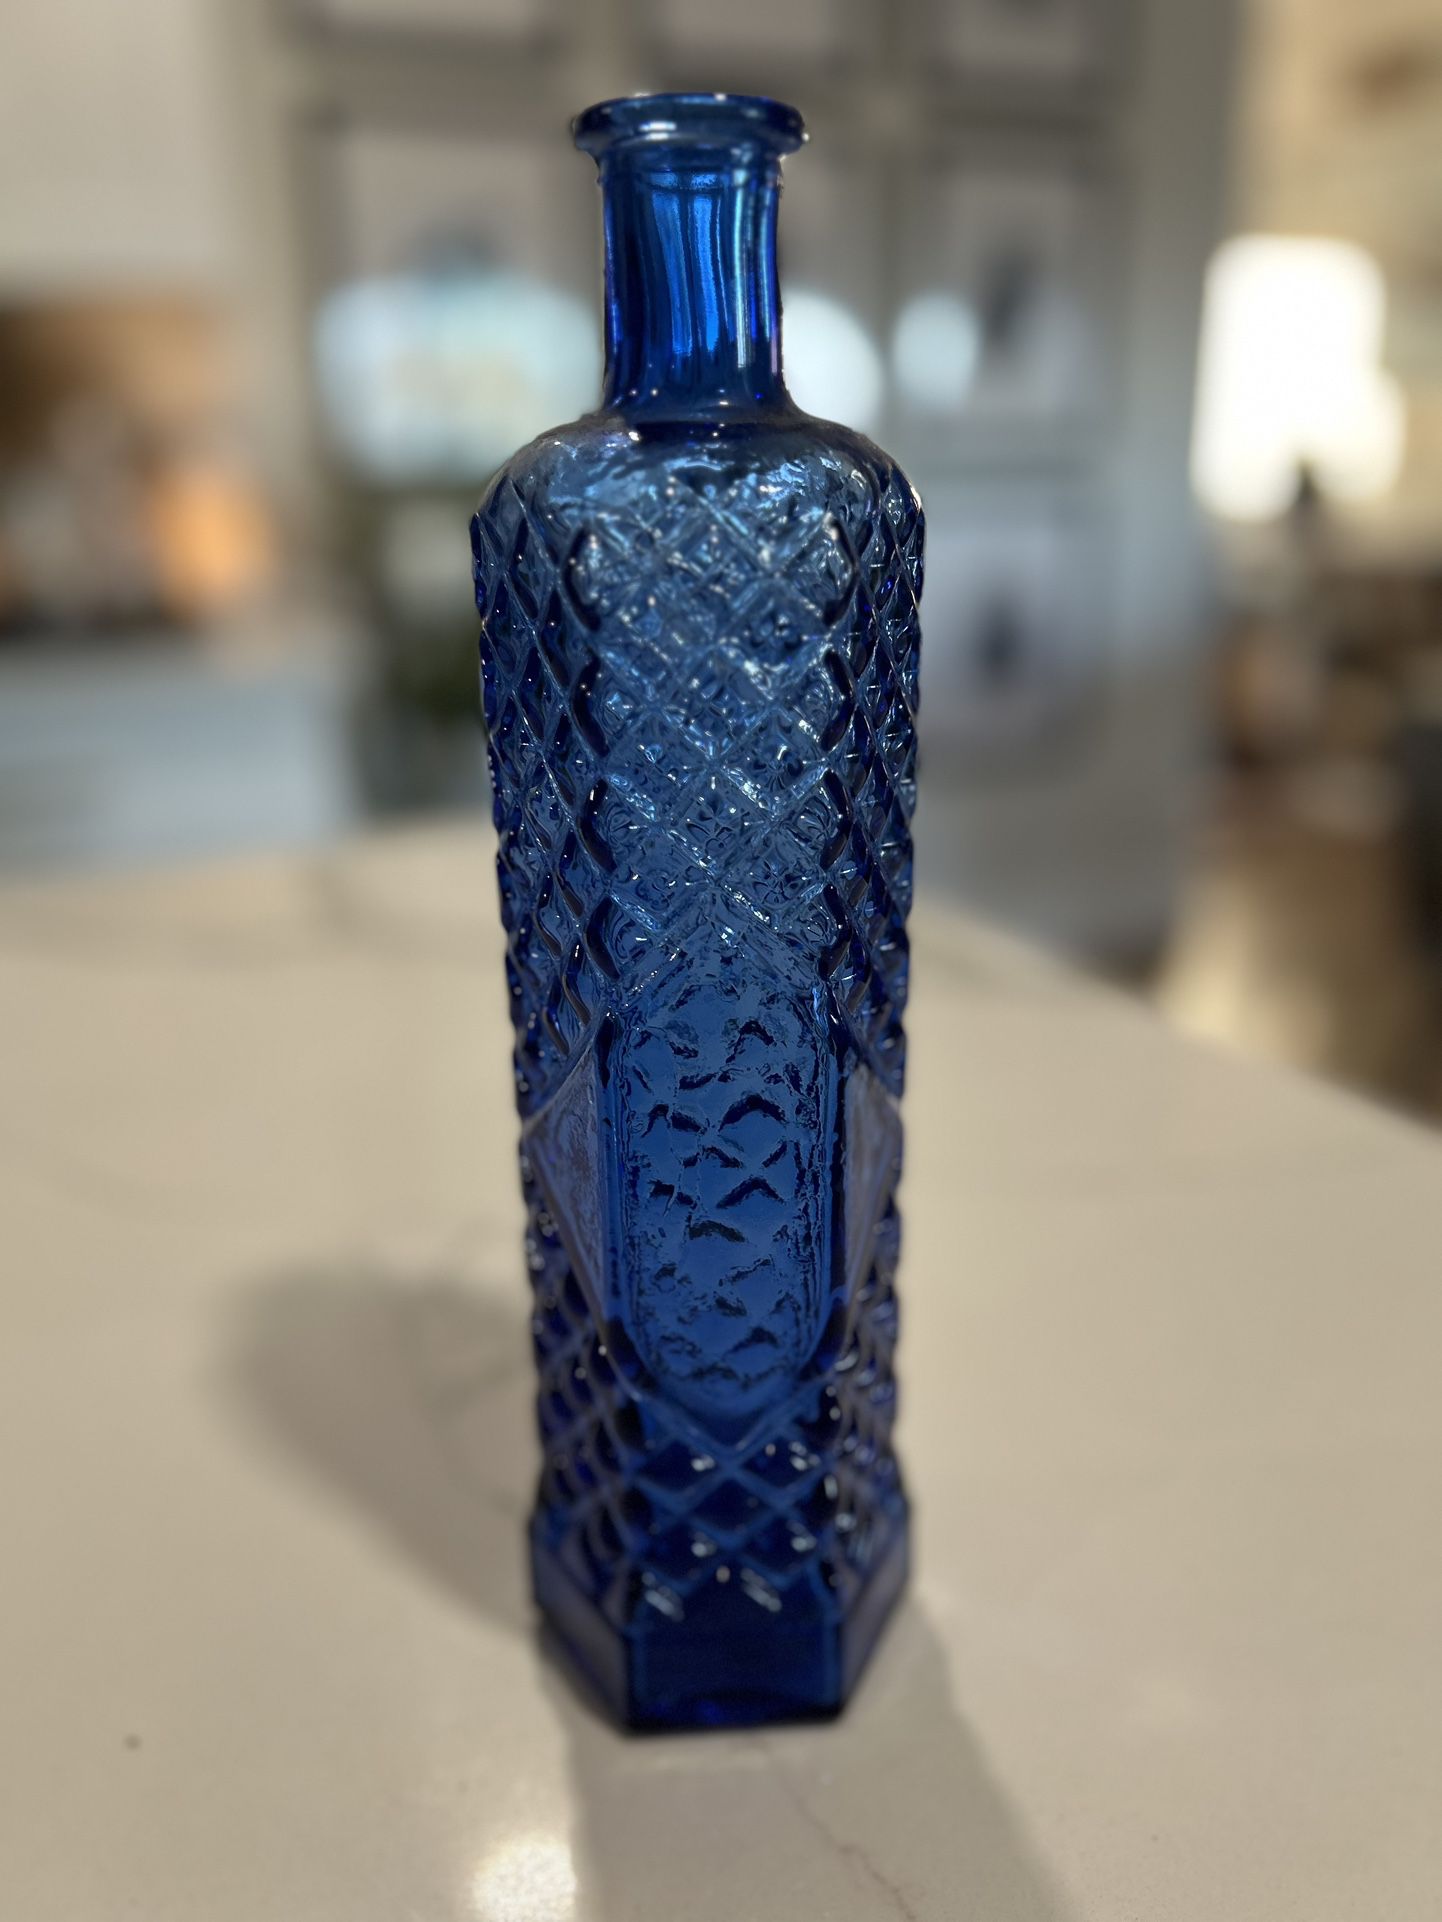 SERPIS ALCOY Cobalt Blue Glass Antique / Vintage Collectible Bottle Spanish Destillrias 6 Sides Diamond Design Blue Glass Vase Made in Spain